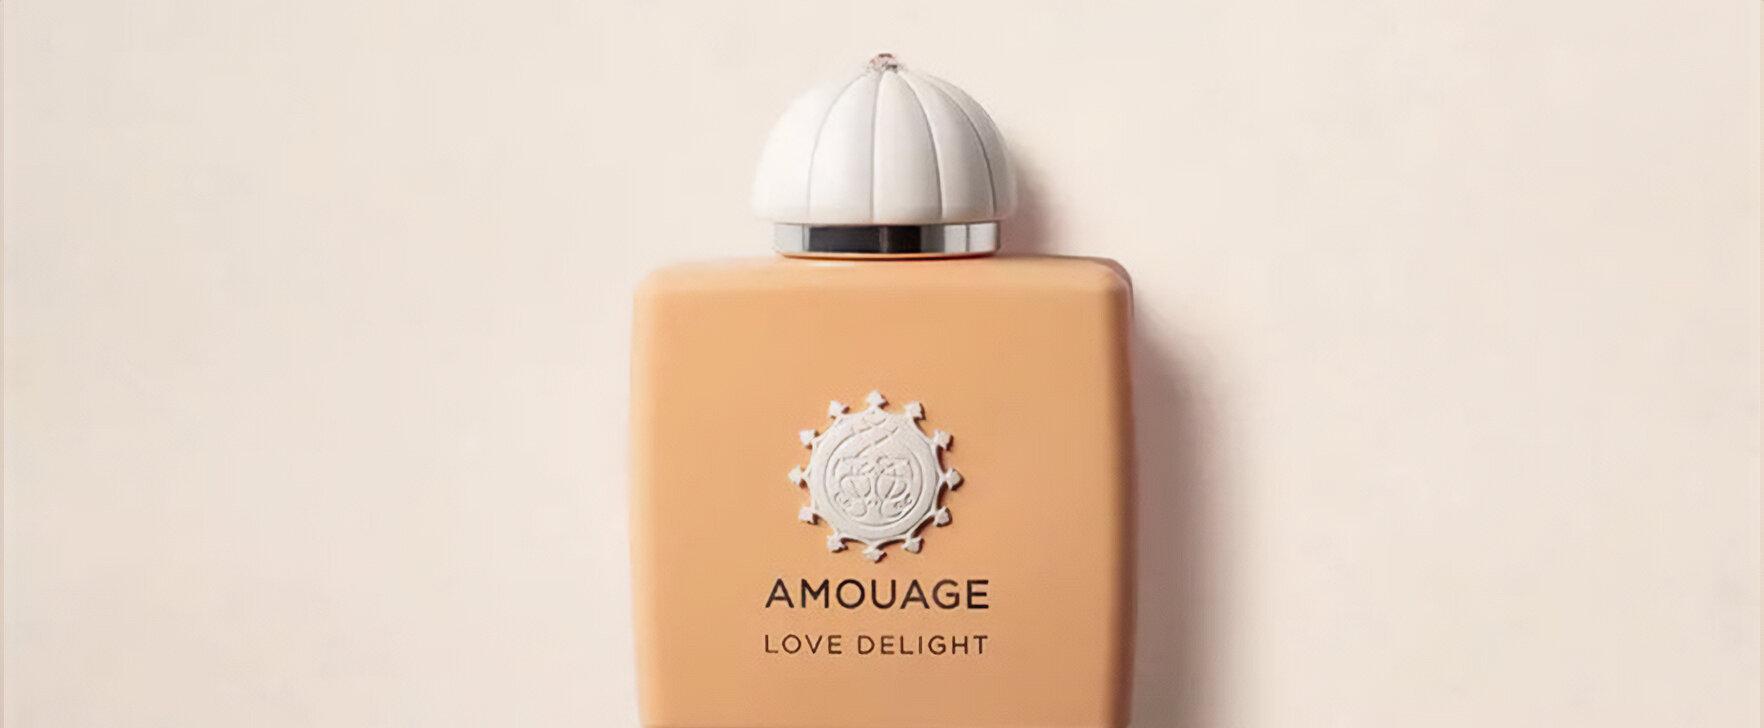 Delicate Flowers and Sweet Delicacies: The New Eau de Parfum "Love Delight" by Amouage